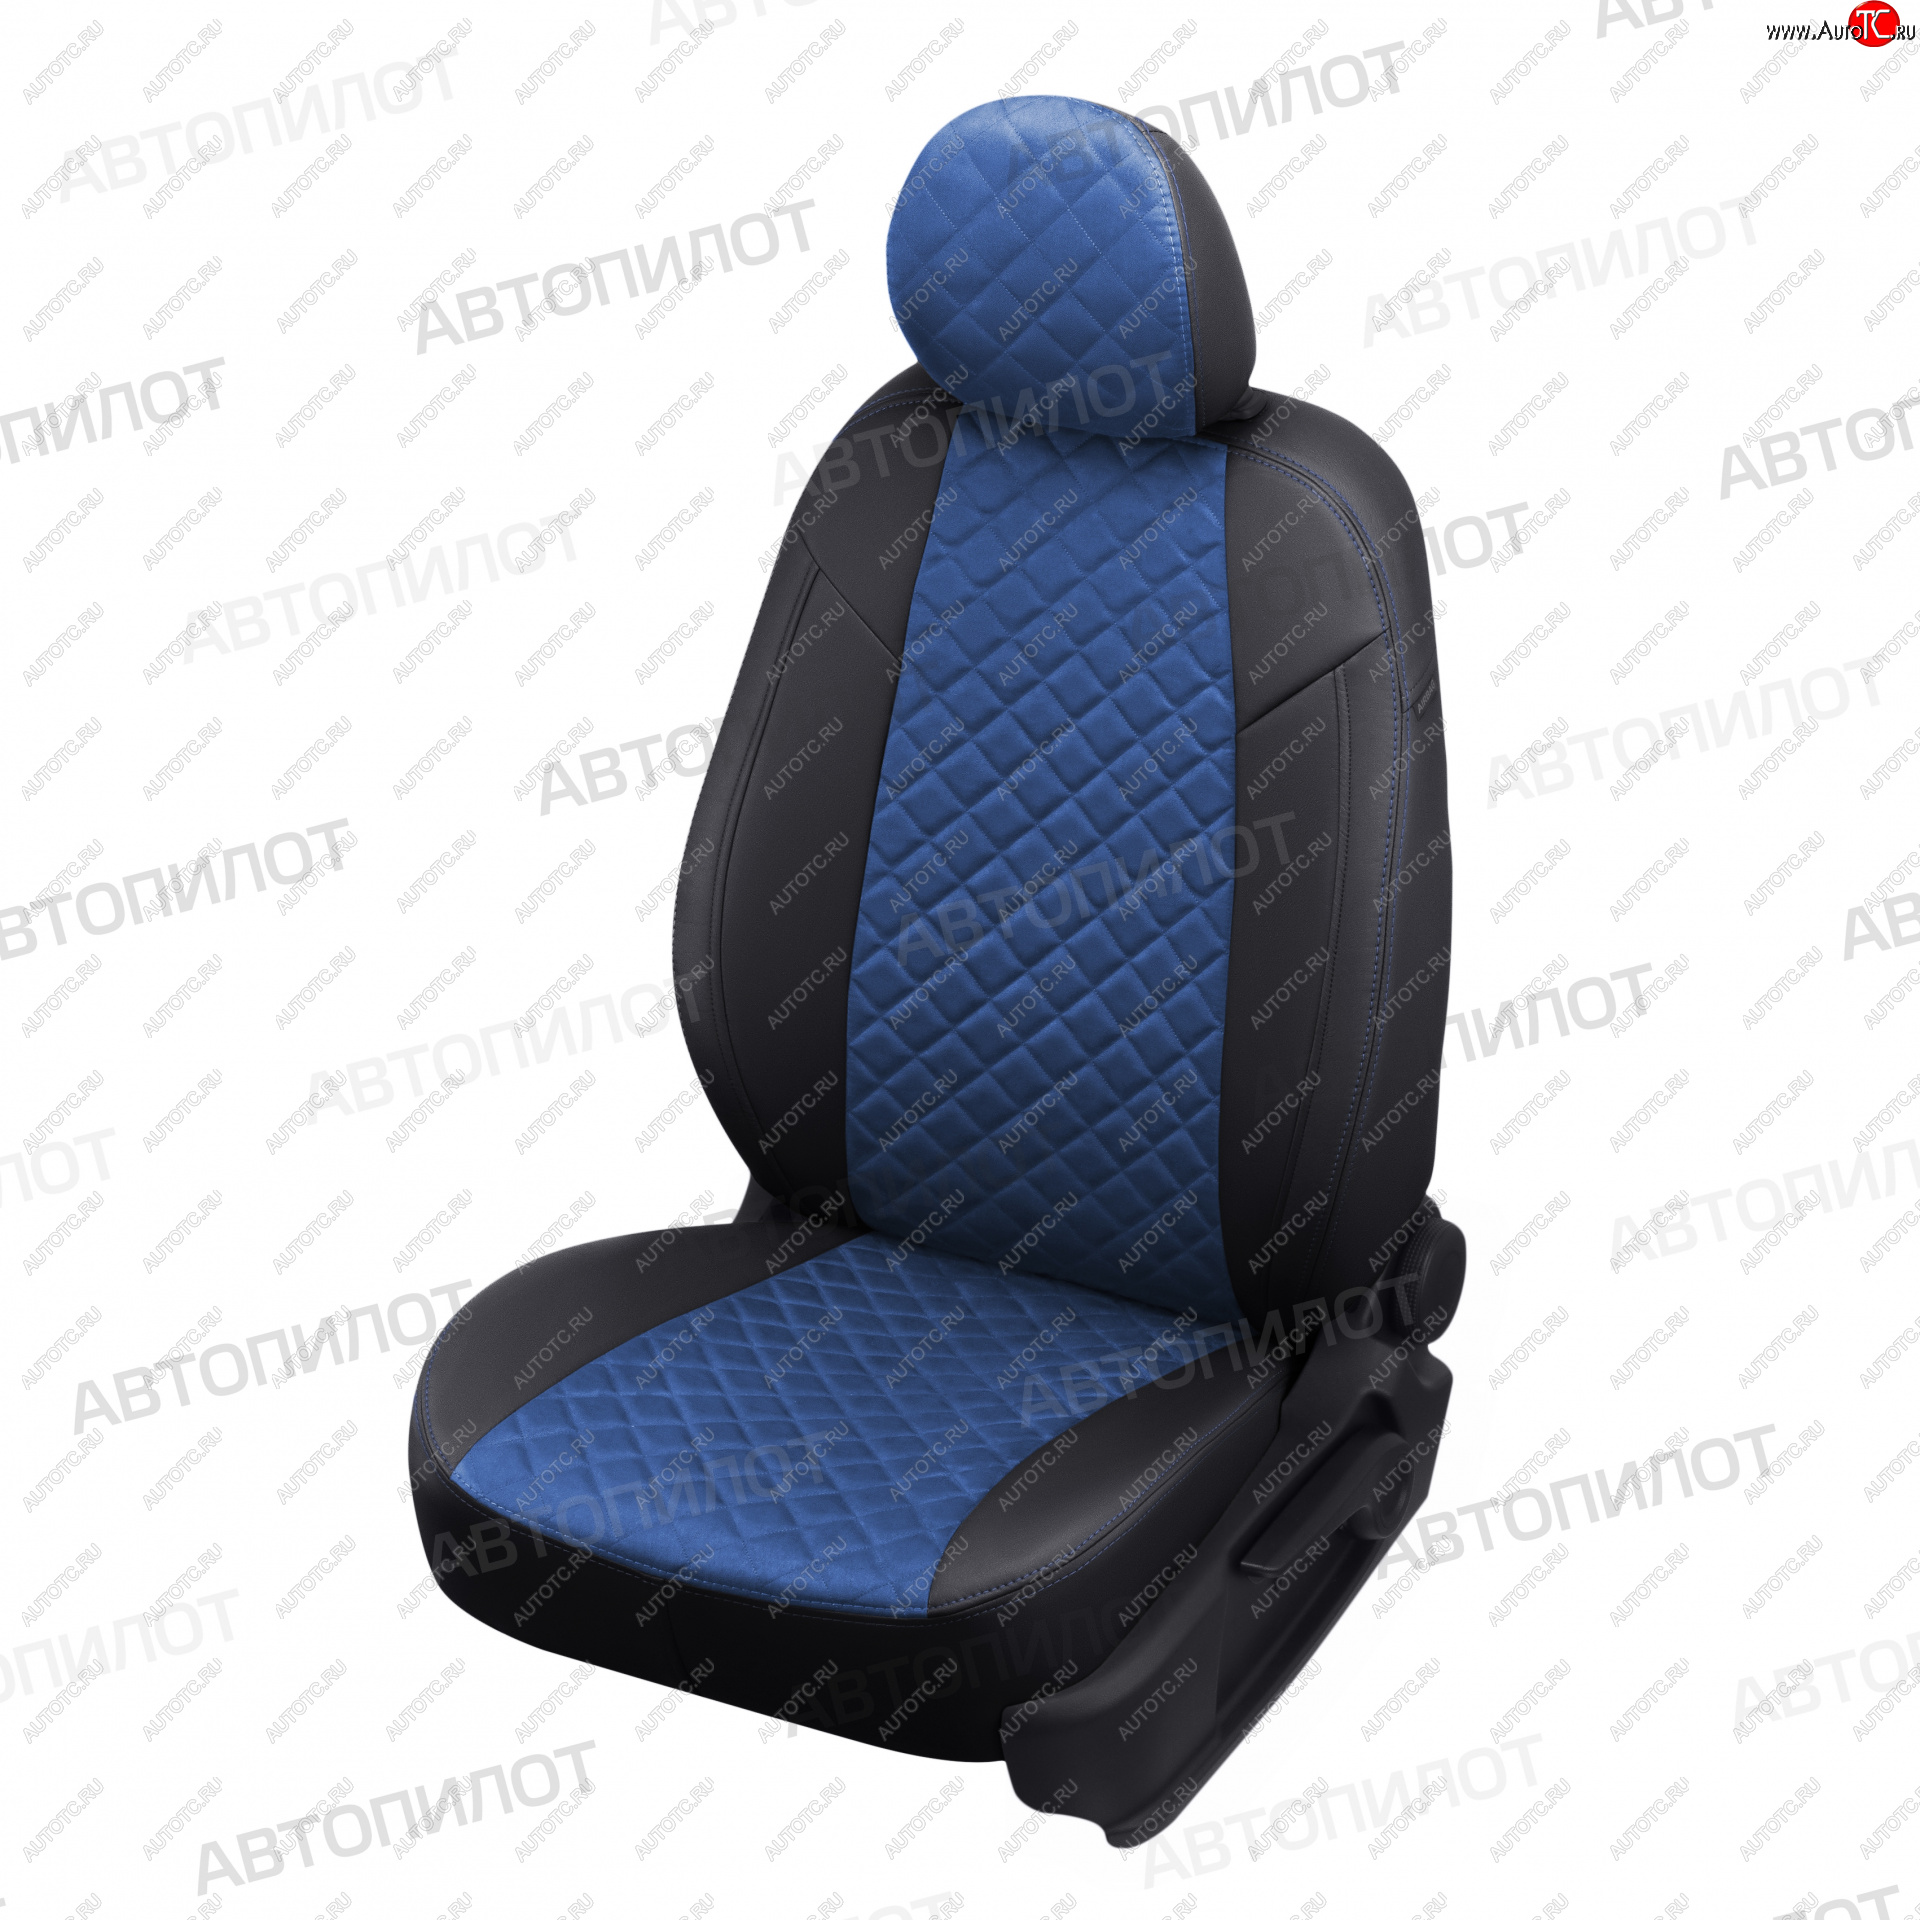 13 999 р. Чехлы сидений (экокожа/алькантара) Автопилот Ромб  KIA Sportage  3 SL (2010-2016) (черный/синий)